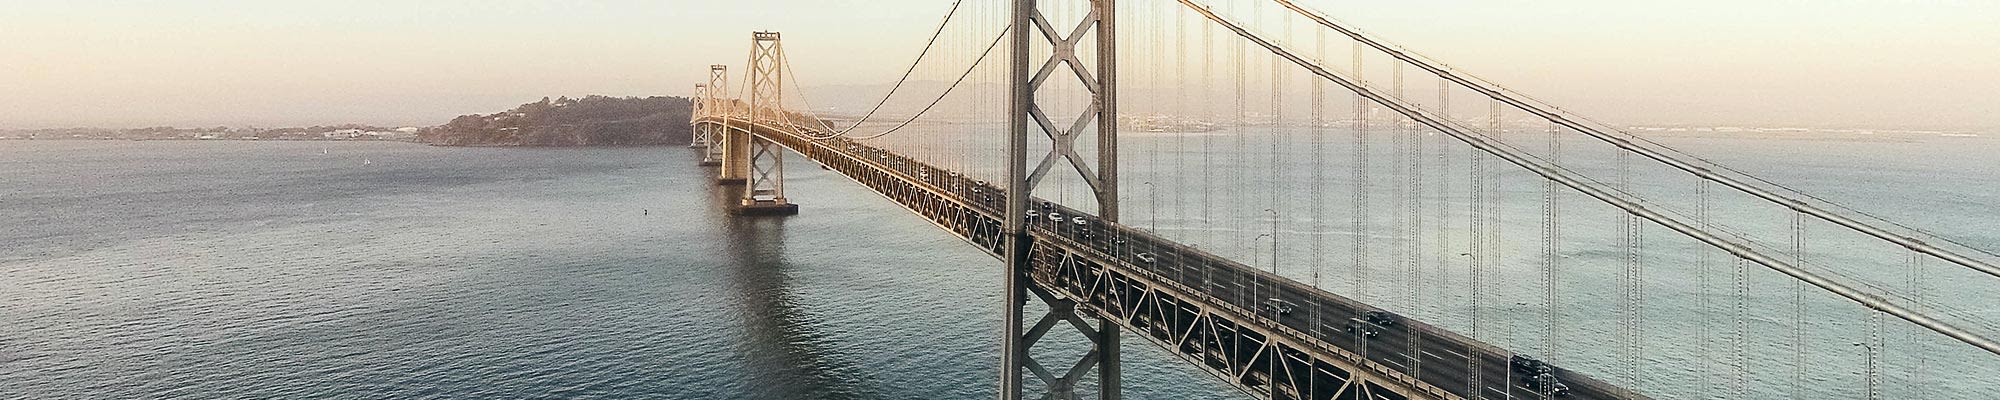 Monitorización de puentes Data Acquisition for Reliable, Stand-Alone Bridge Monitoring 